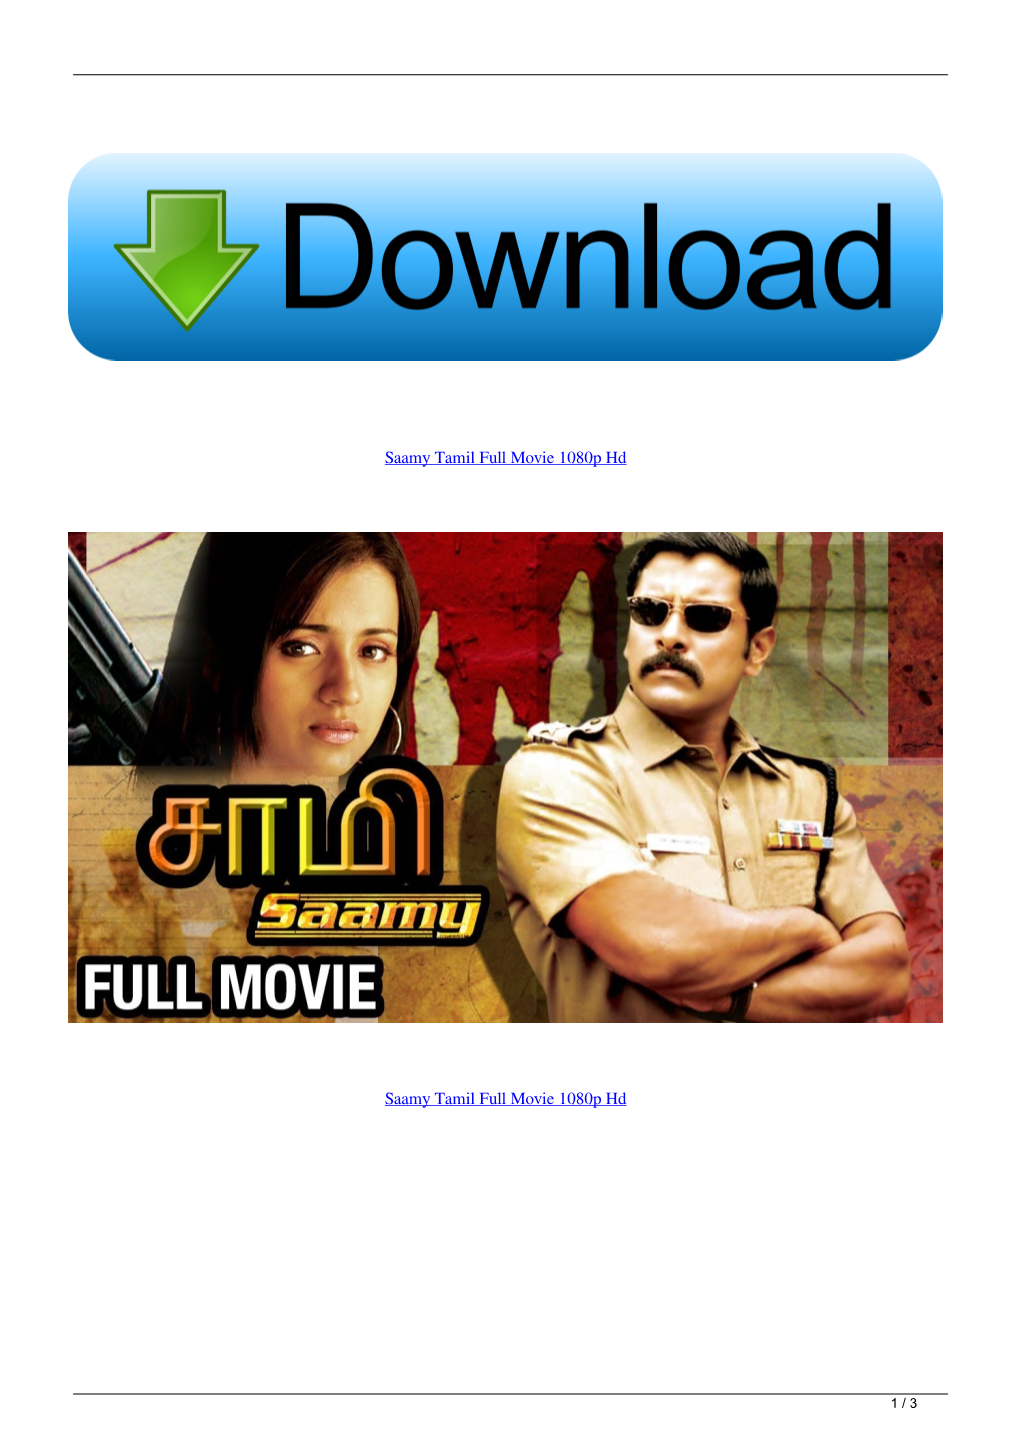 Saamy Tamil Full Movie 1080P Hd